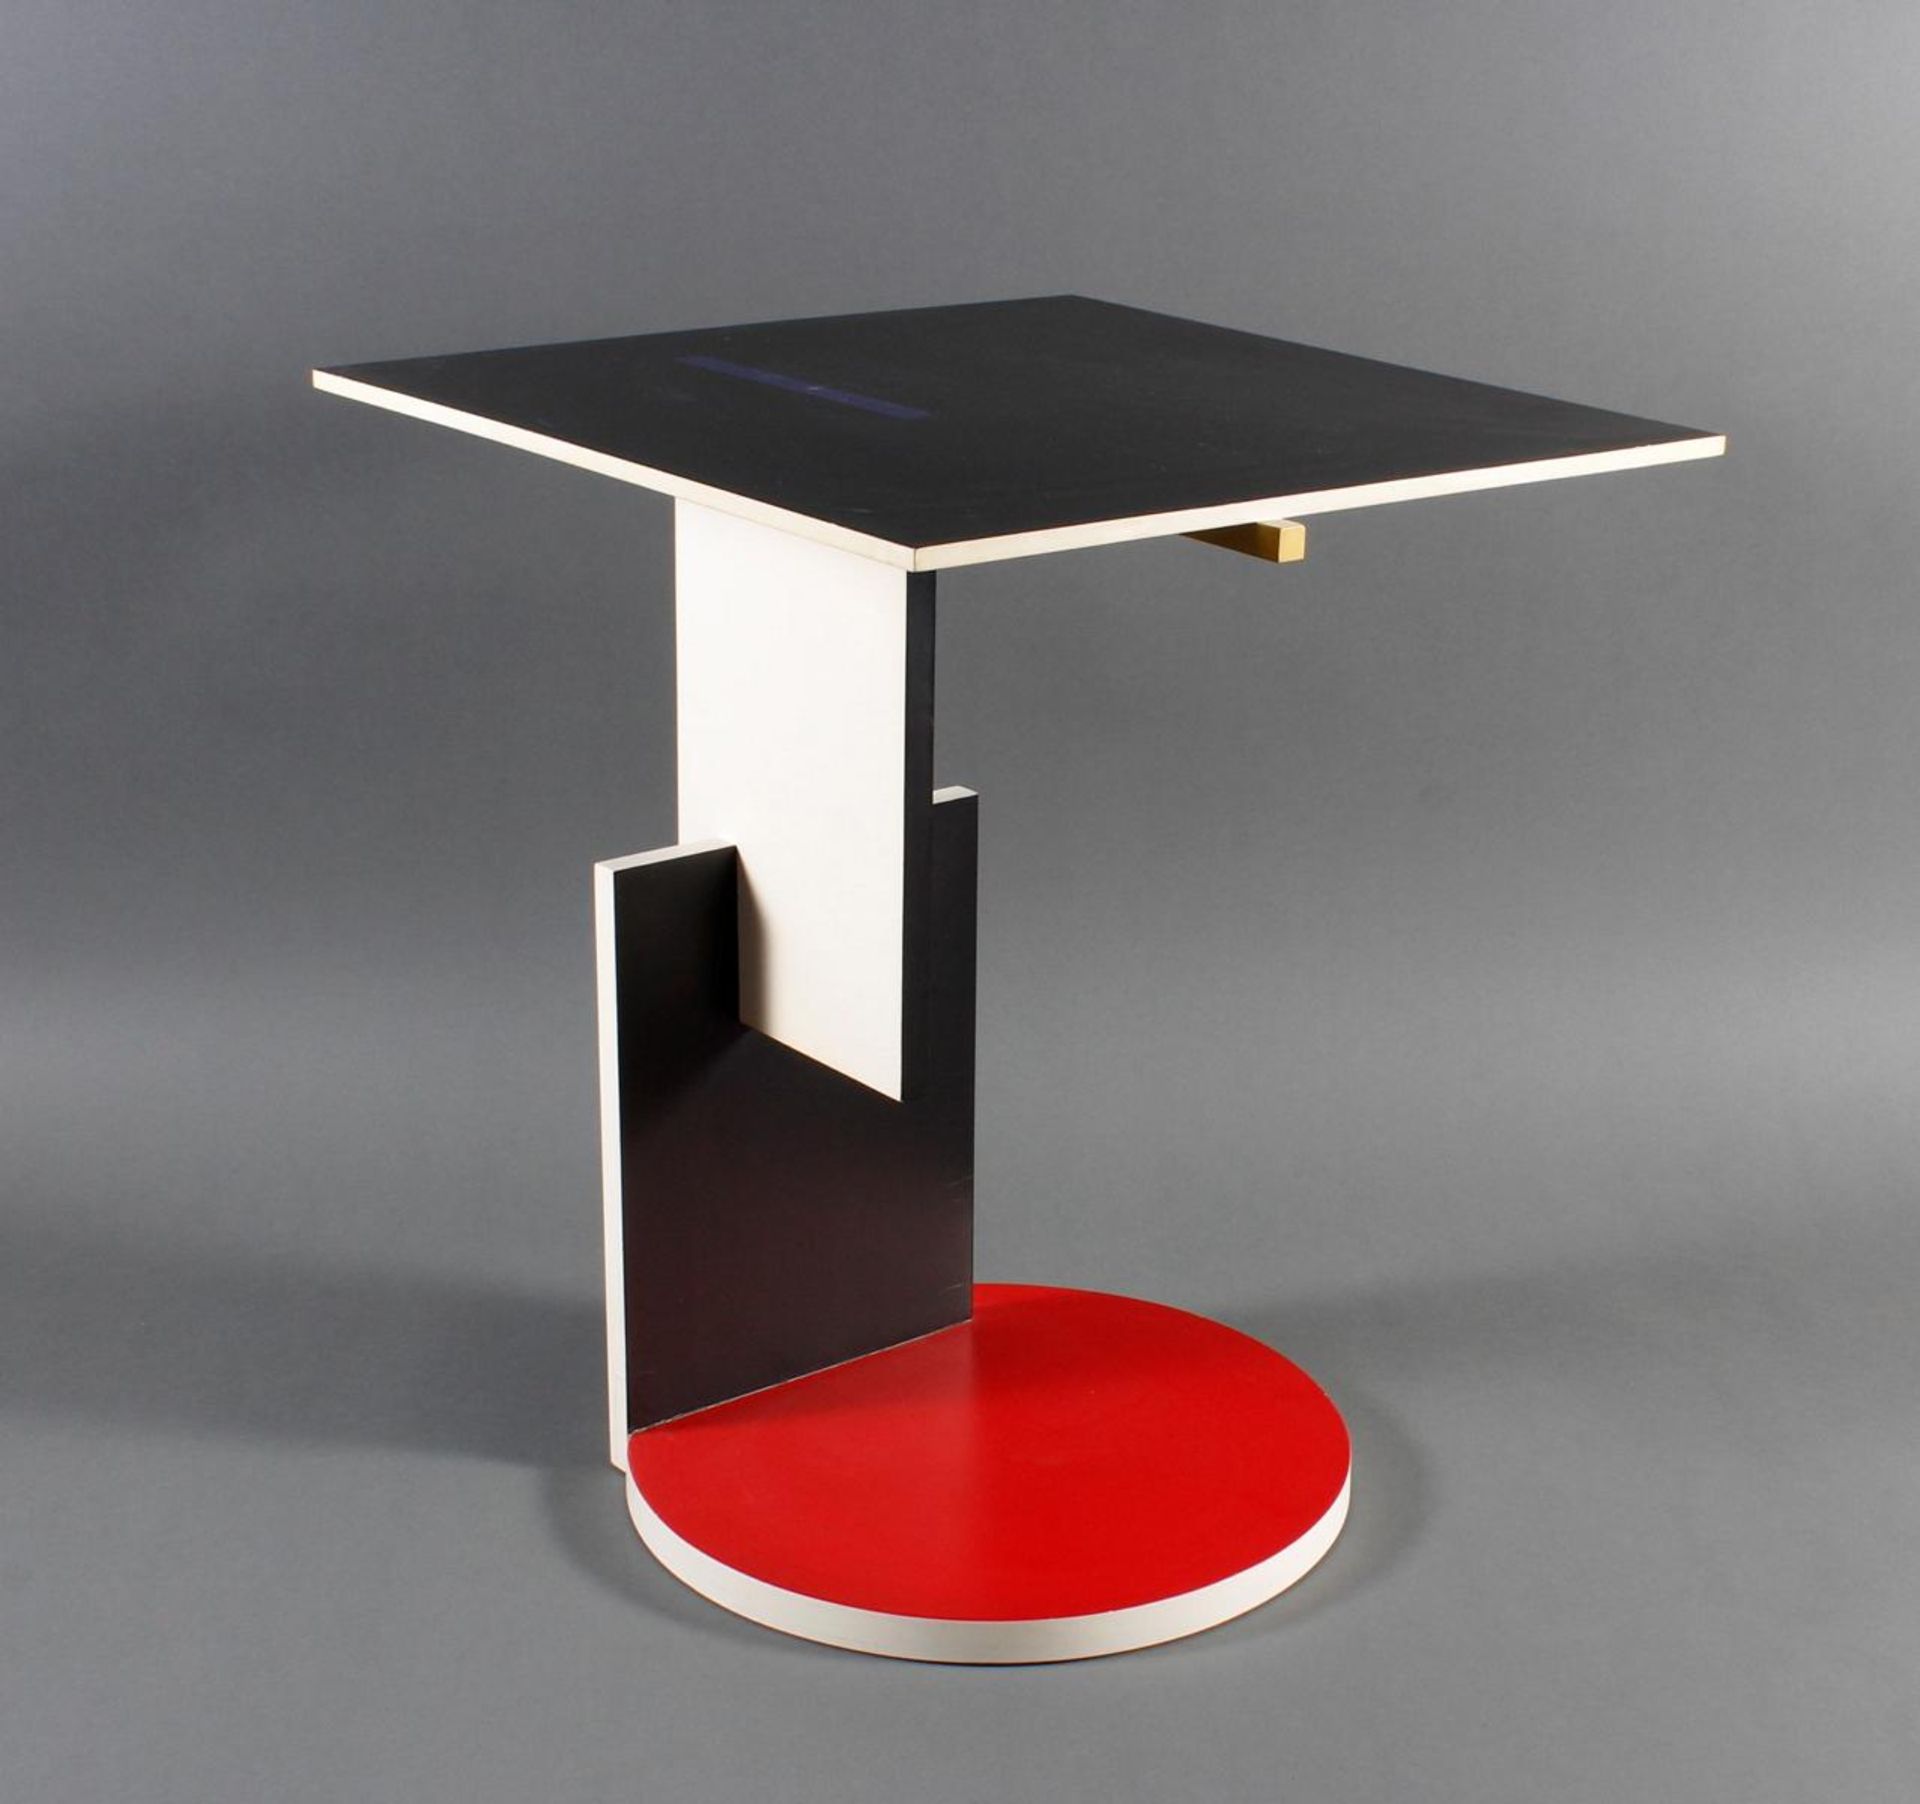 Gerrit Rietveld Schröder Tisch - Image 2 of 6